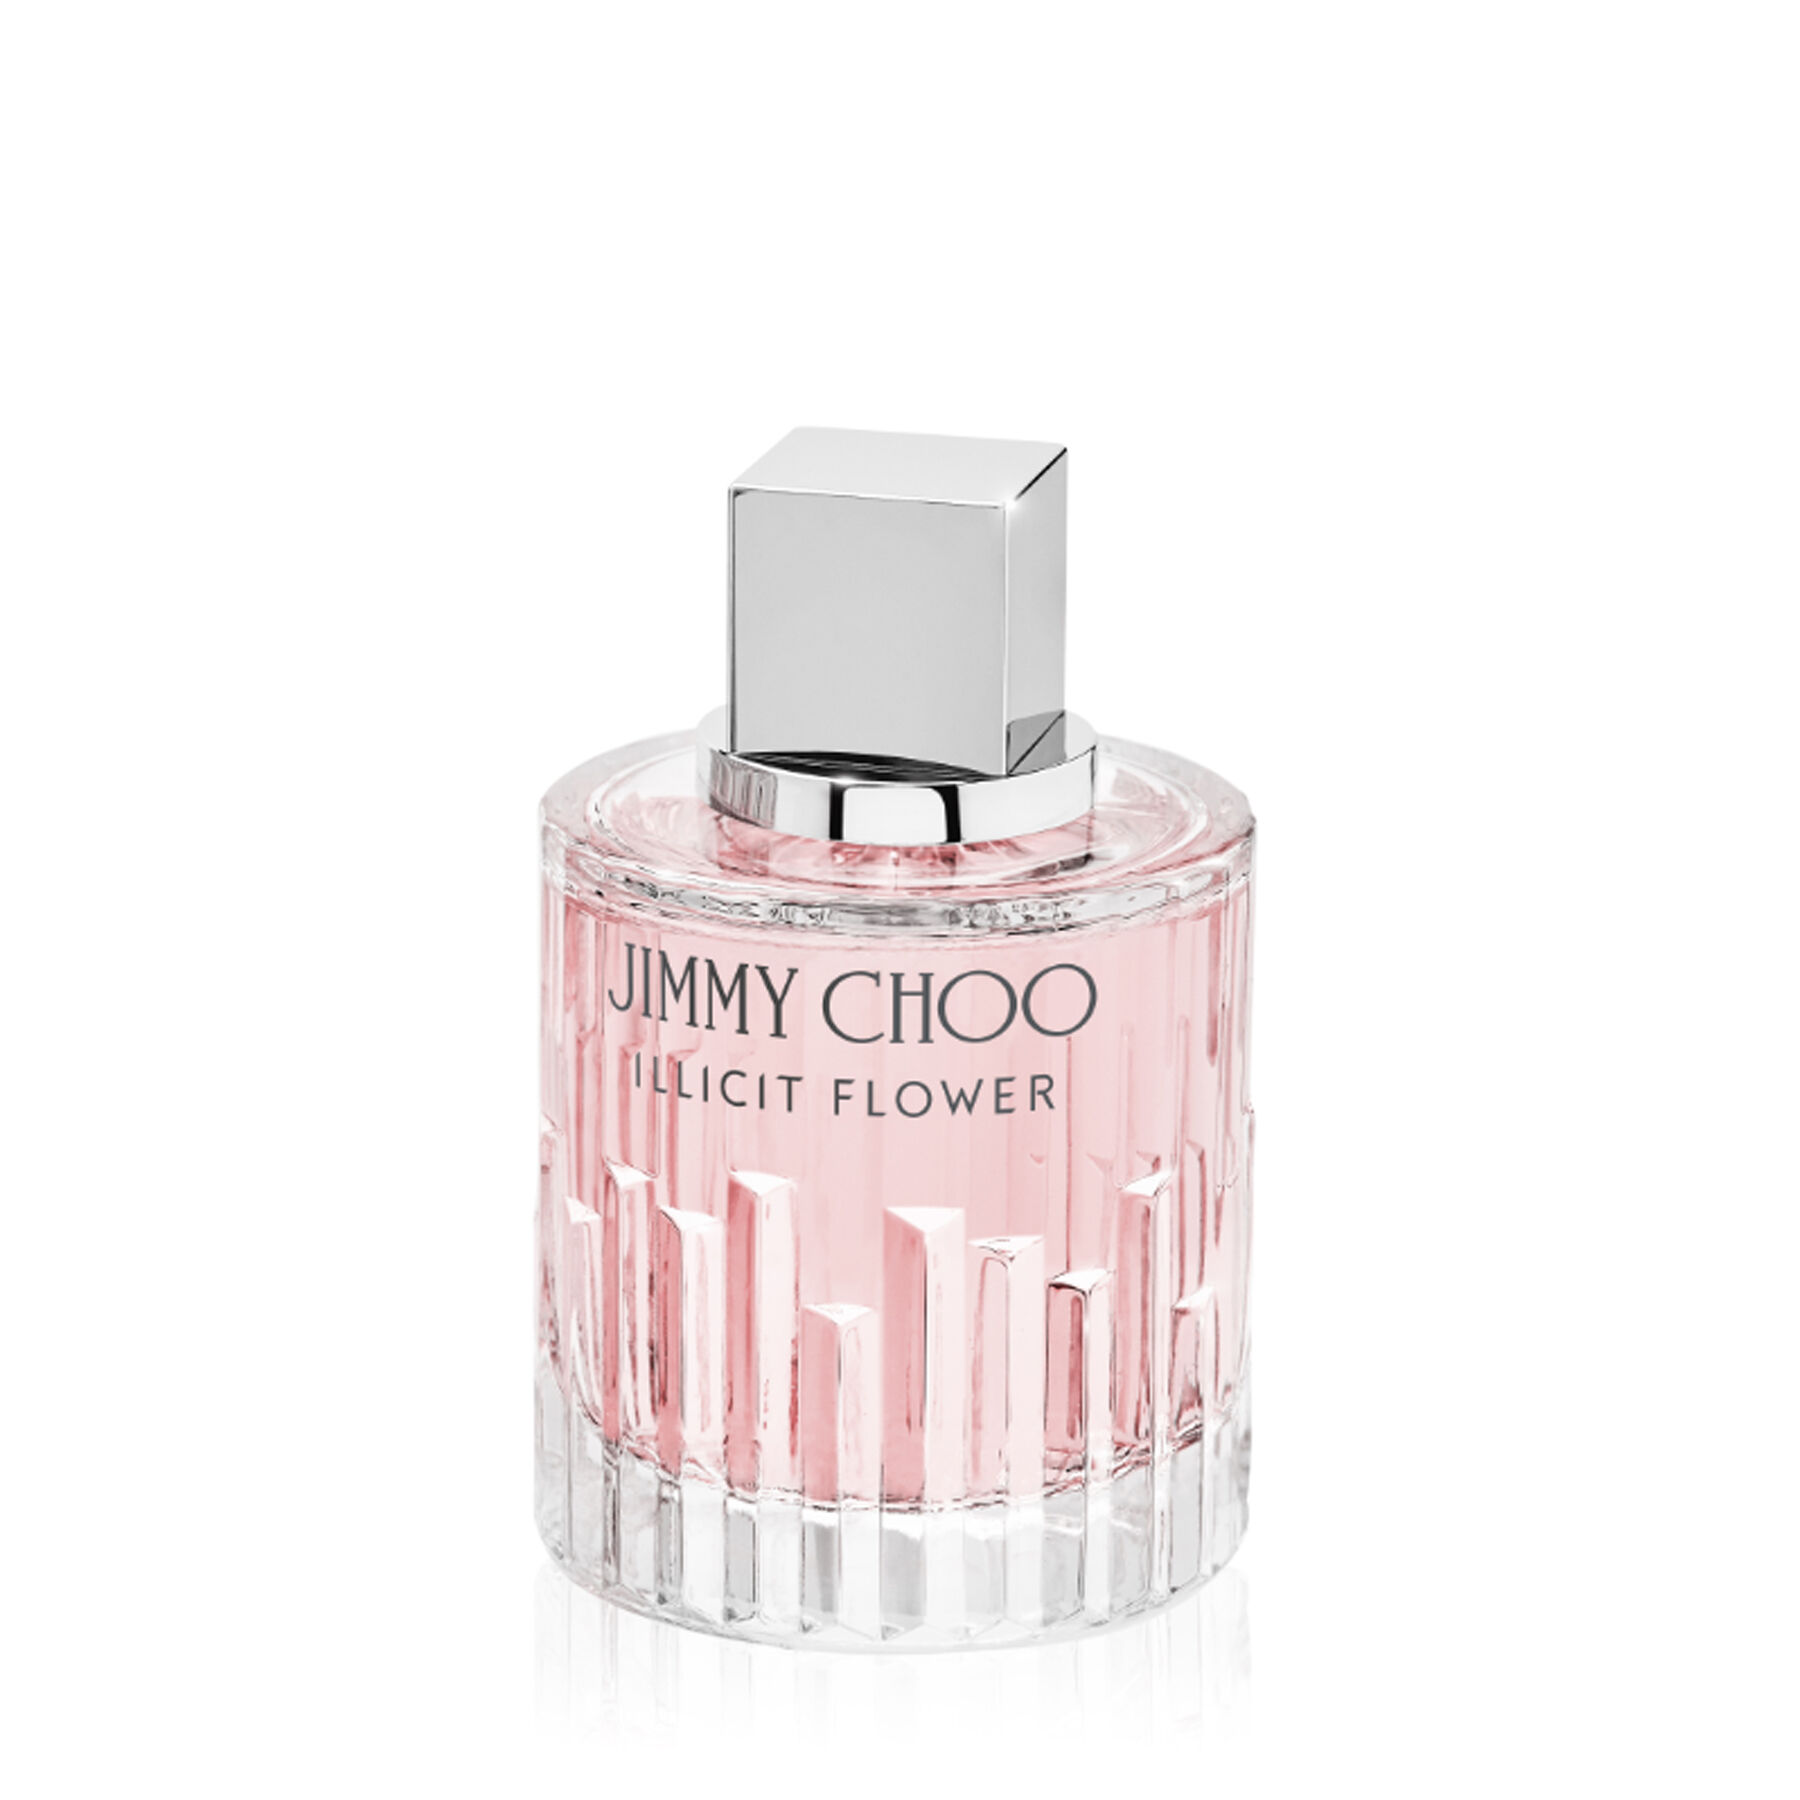 jimmy choo perfume pink bottle